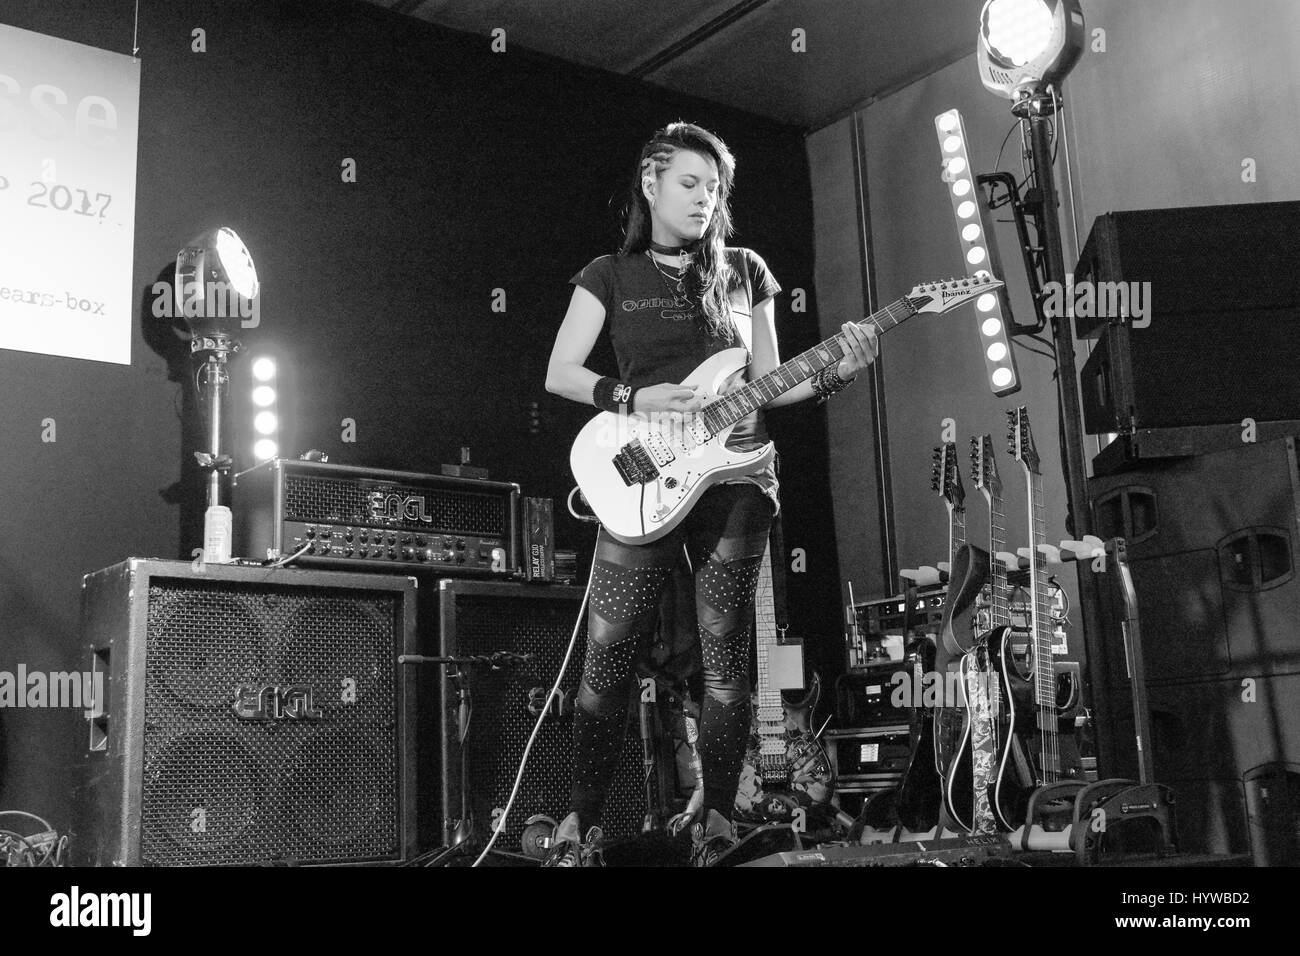 Frankfurt, Germany. 6th April 2017. Jen Majura, guitarist of the band Evanescence, preparing for her gig in the guitar camp at Musikmesse in Frankfurt, Germany Credit: Markus Wissmann/Alamy Live News Stock Photo